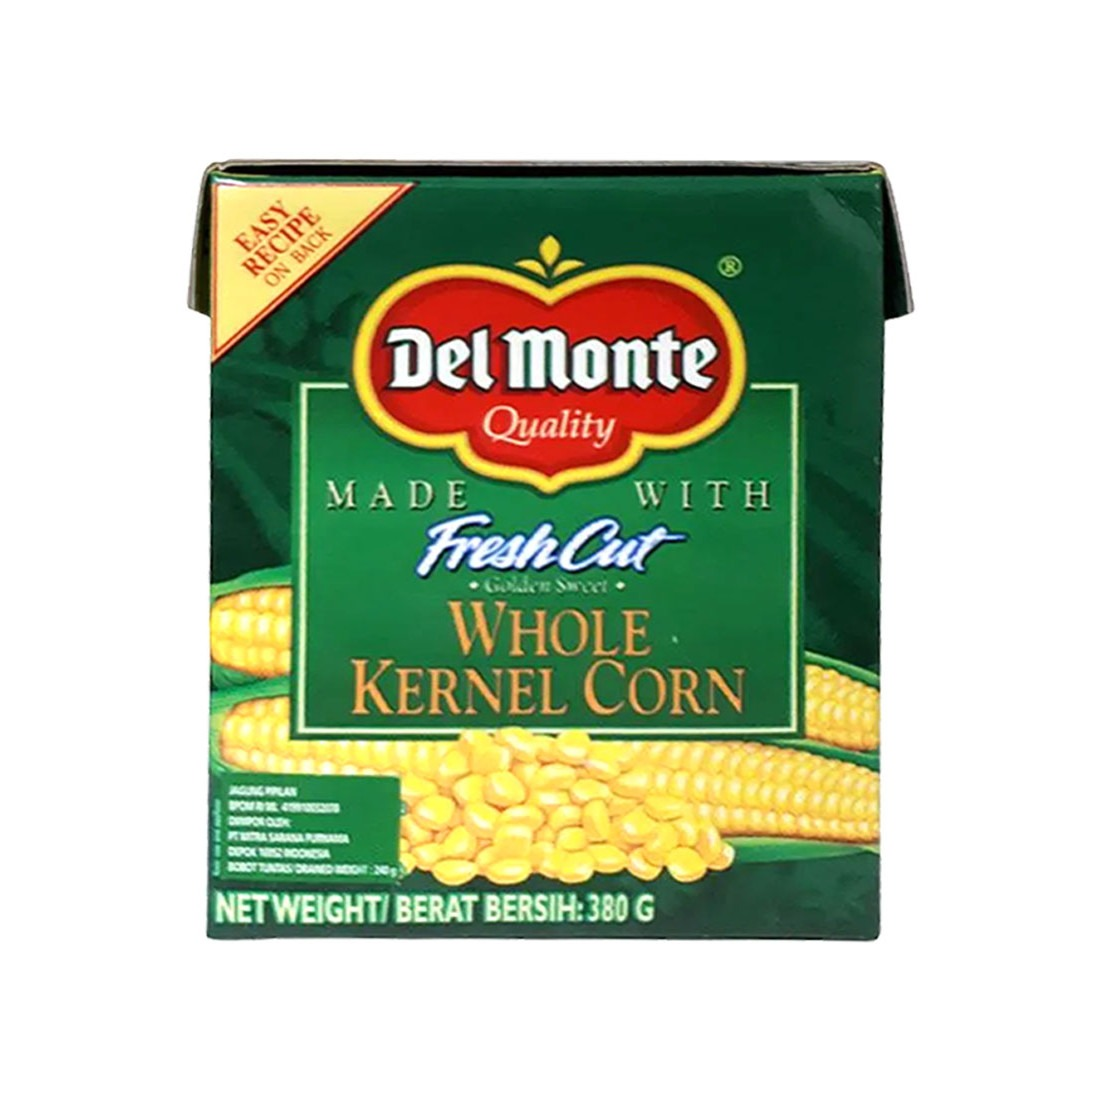 Delmonte 380g Fresh Cut Whole Kernel Corn